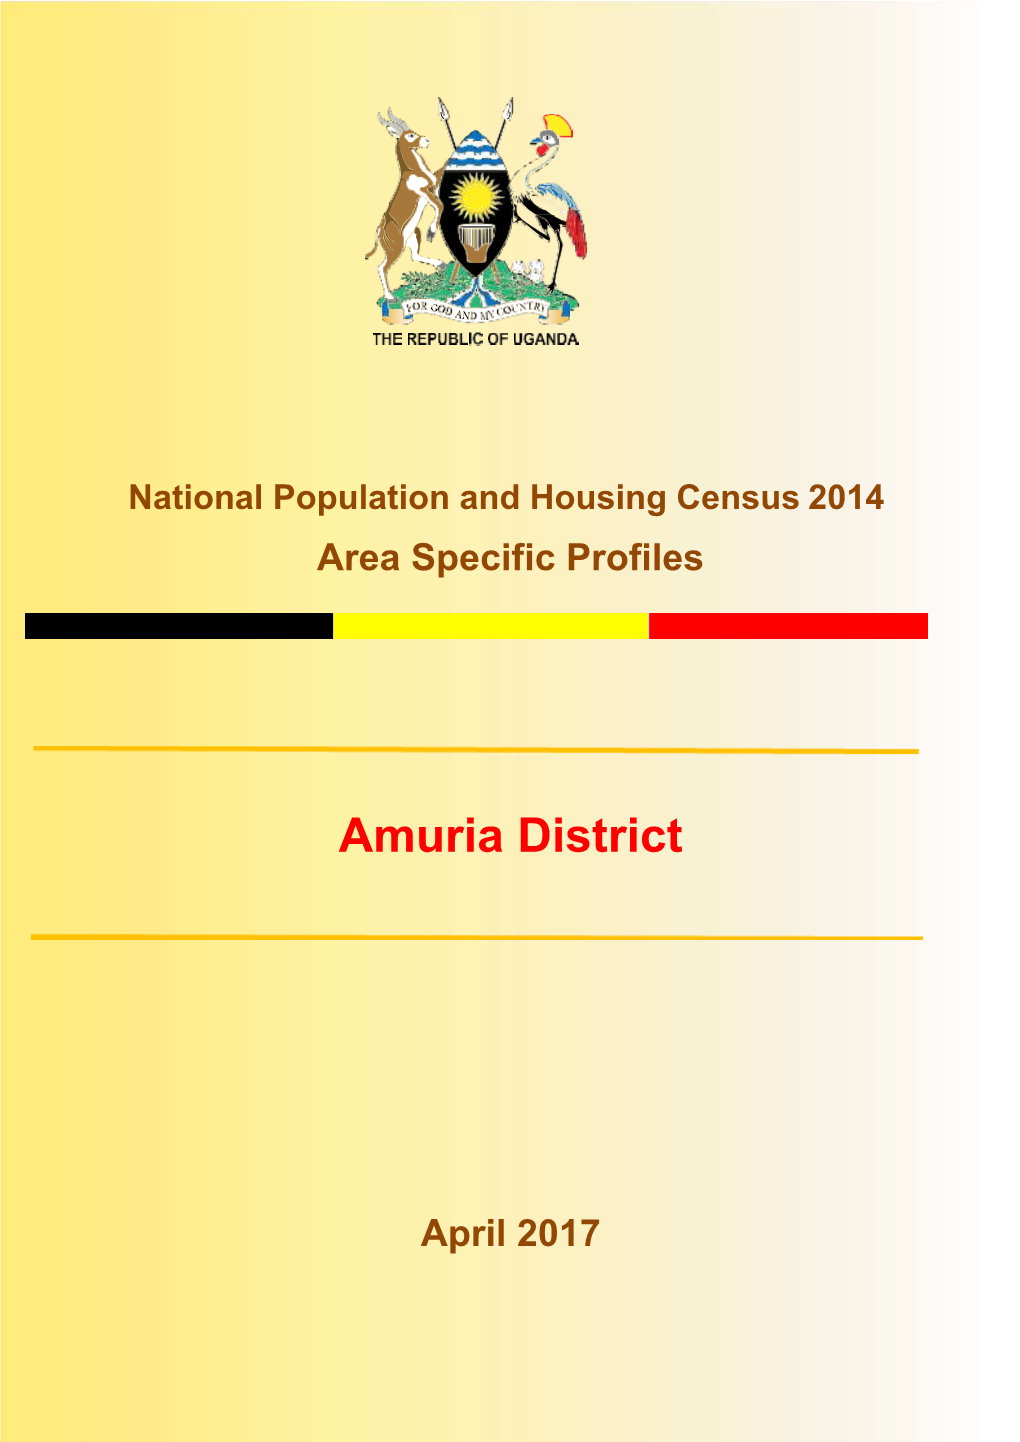 Amuria District